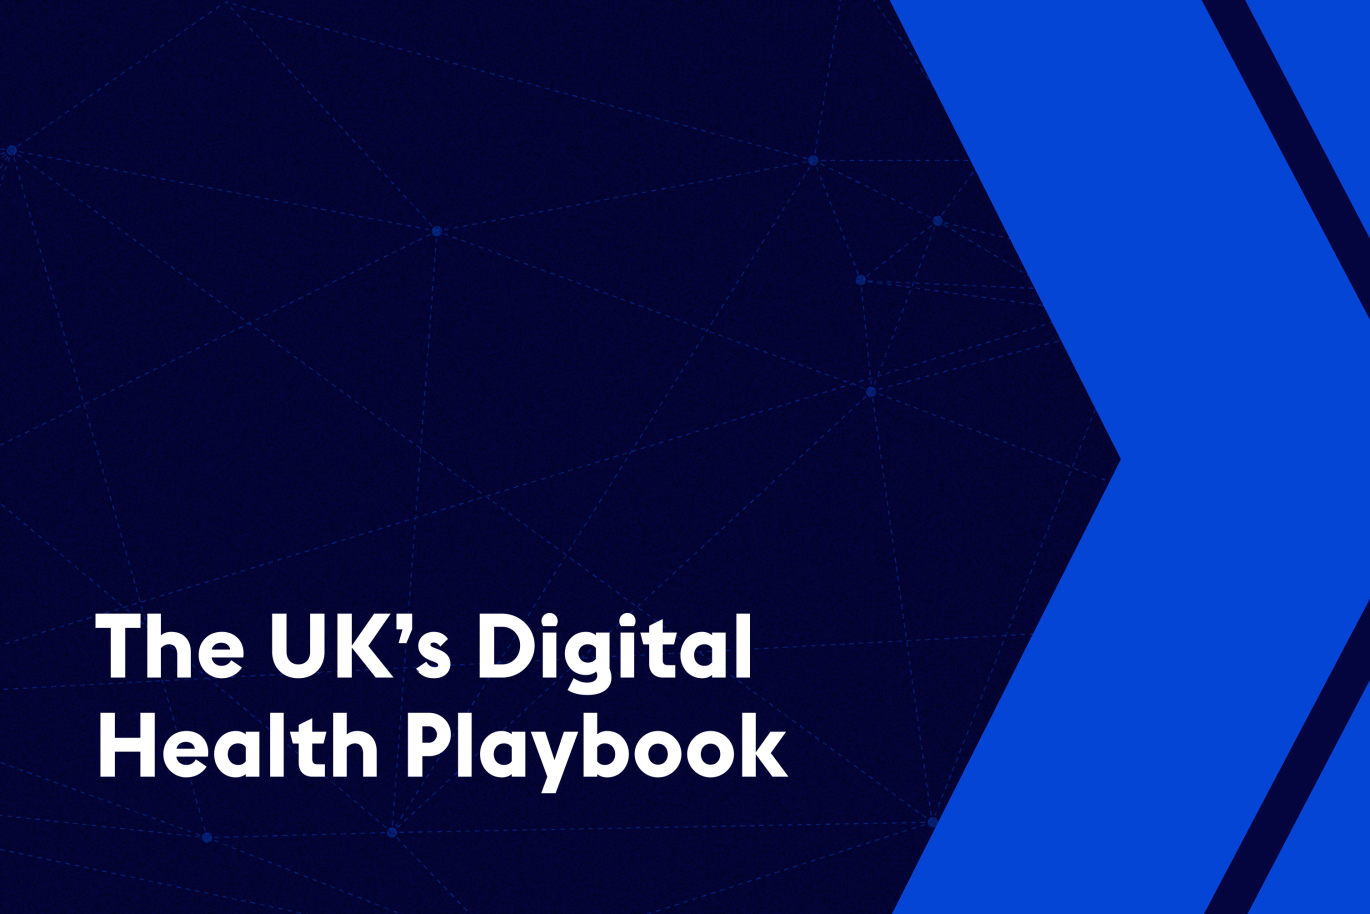 A new platform promoting UK digital health innovation to the world